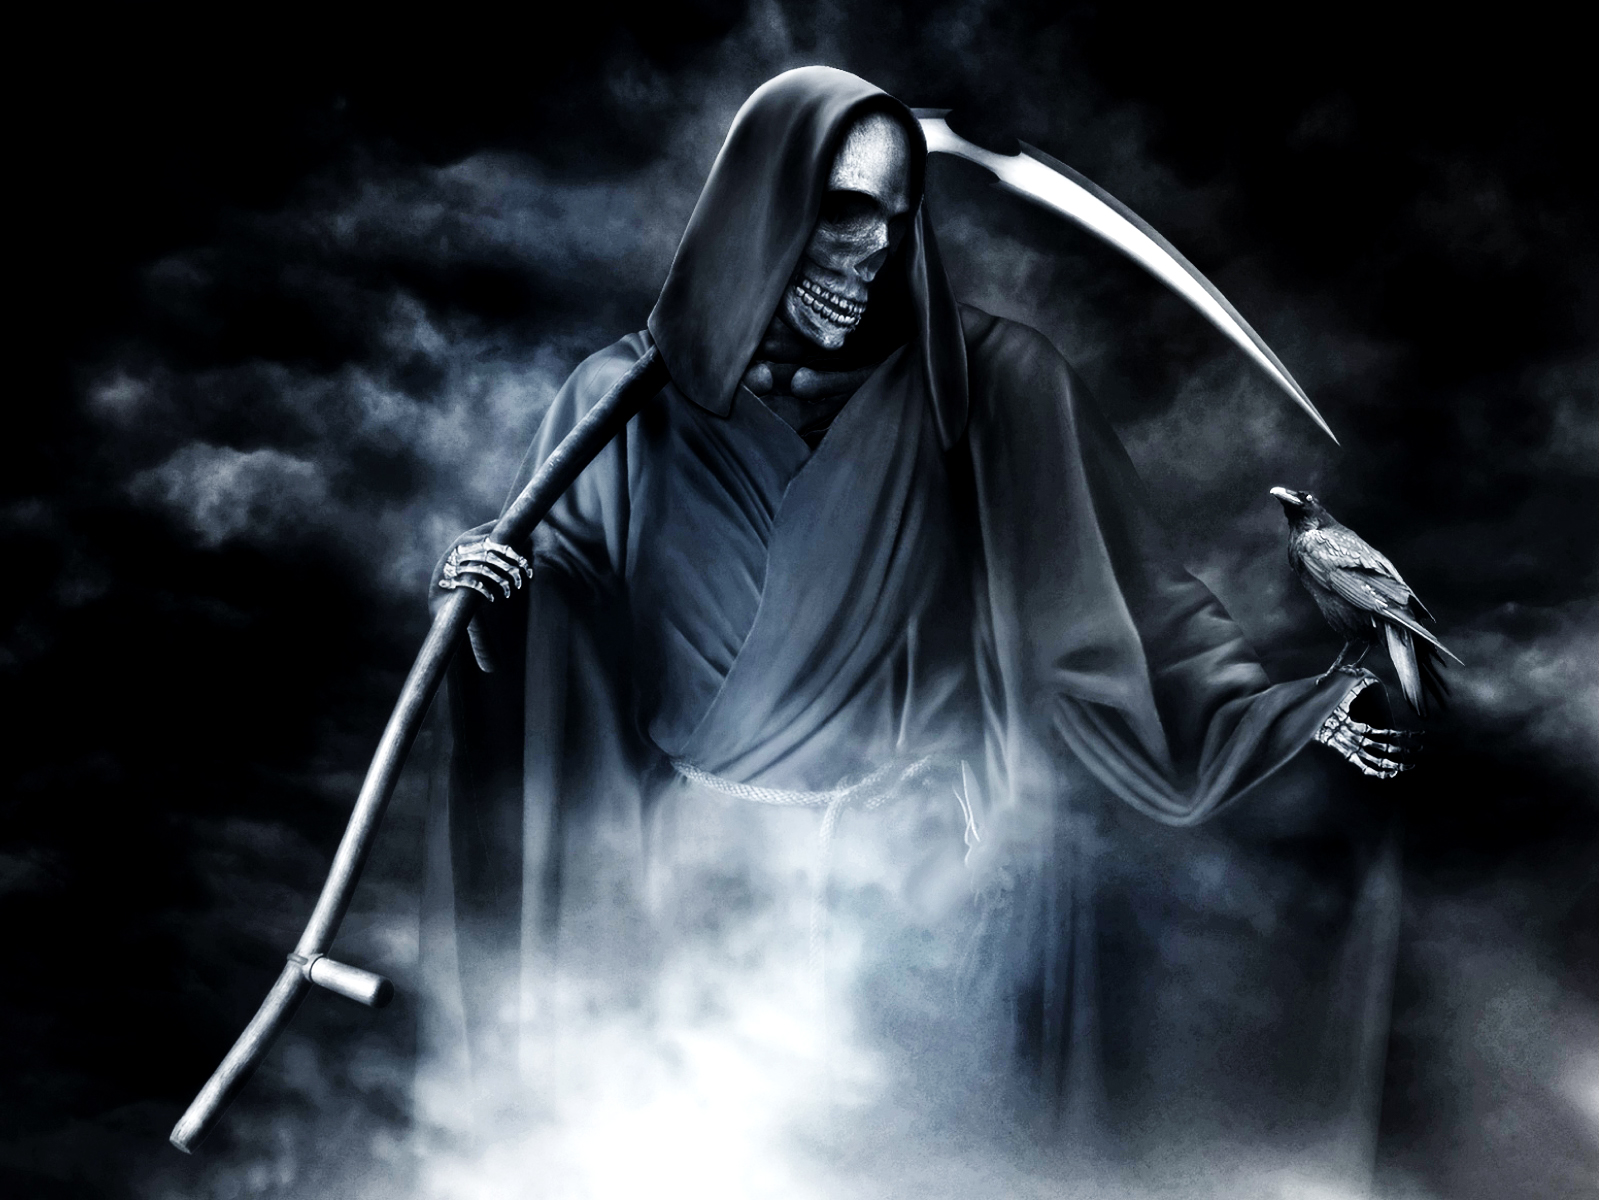 Grim Reaper HD Wallpaper Image To